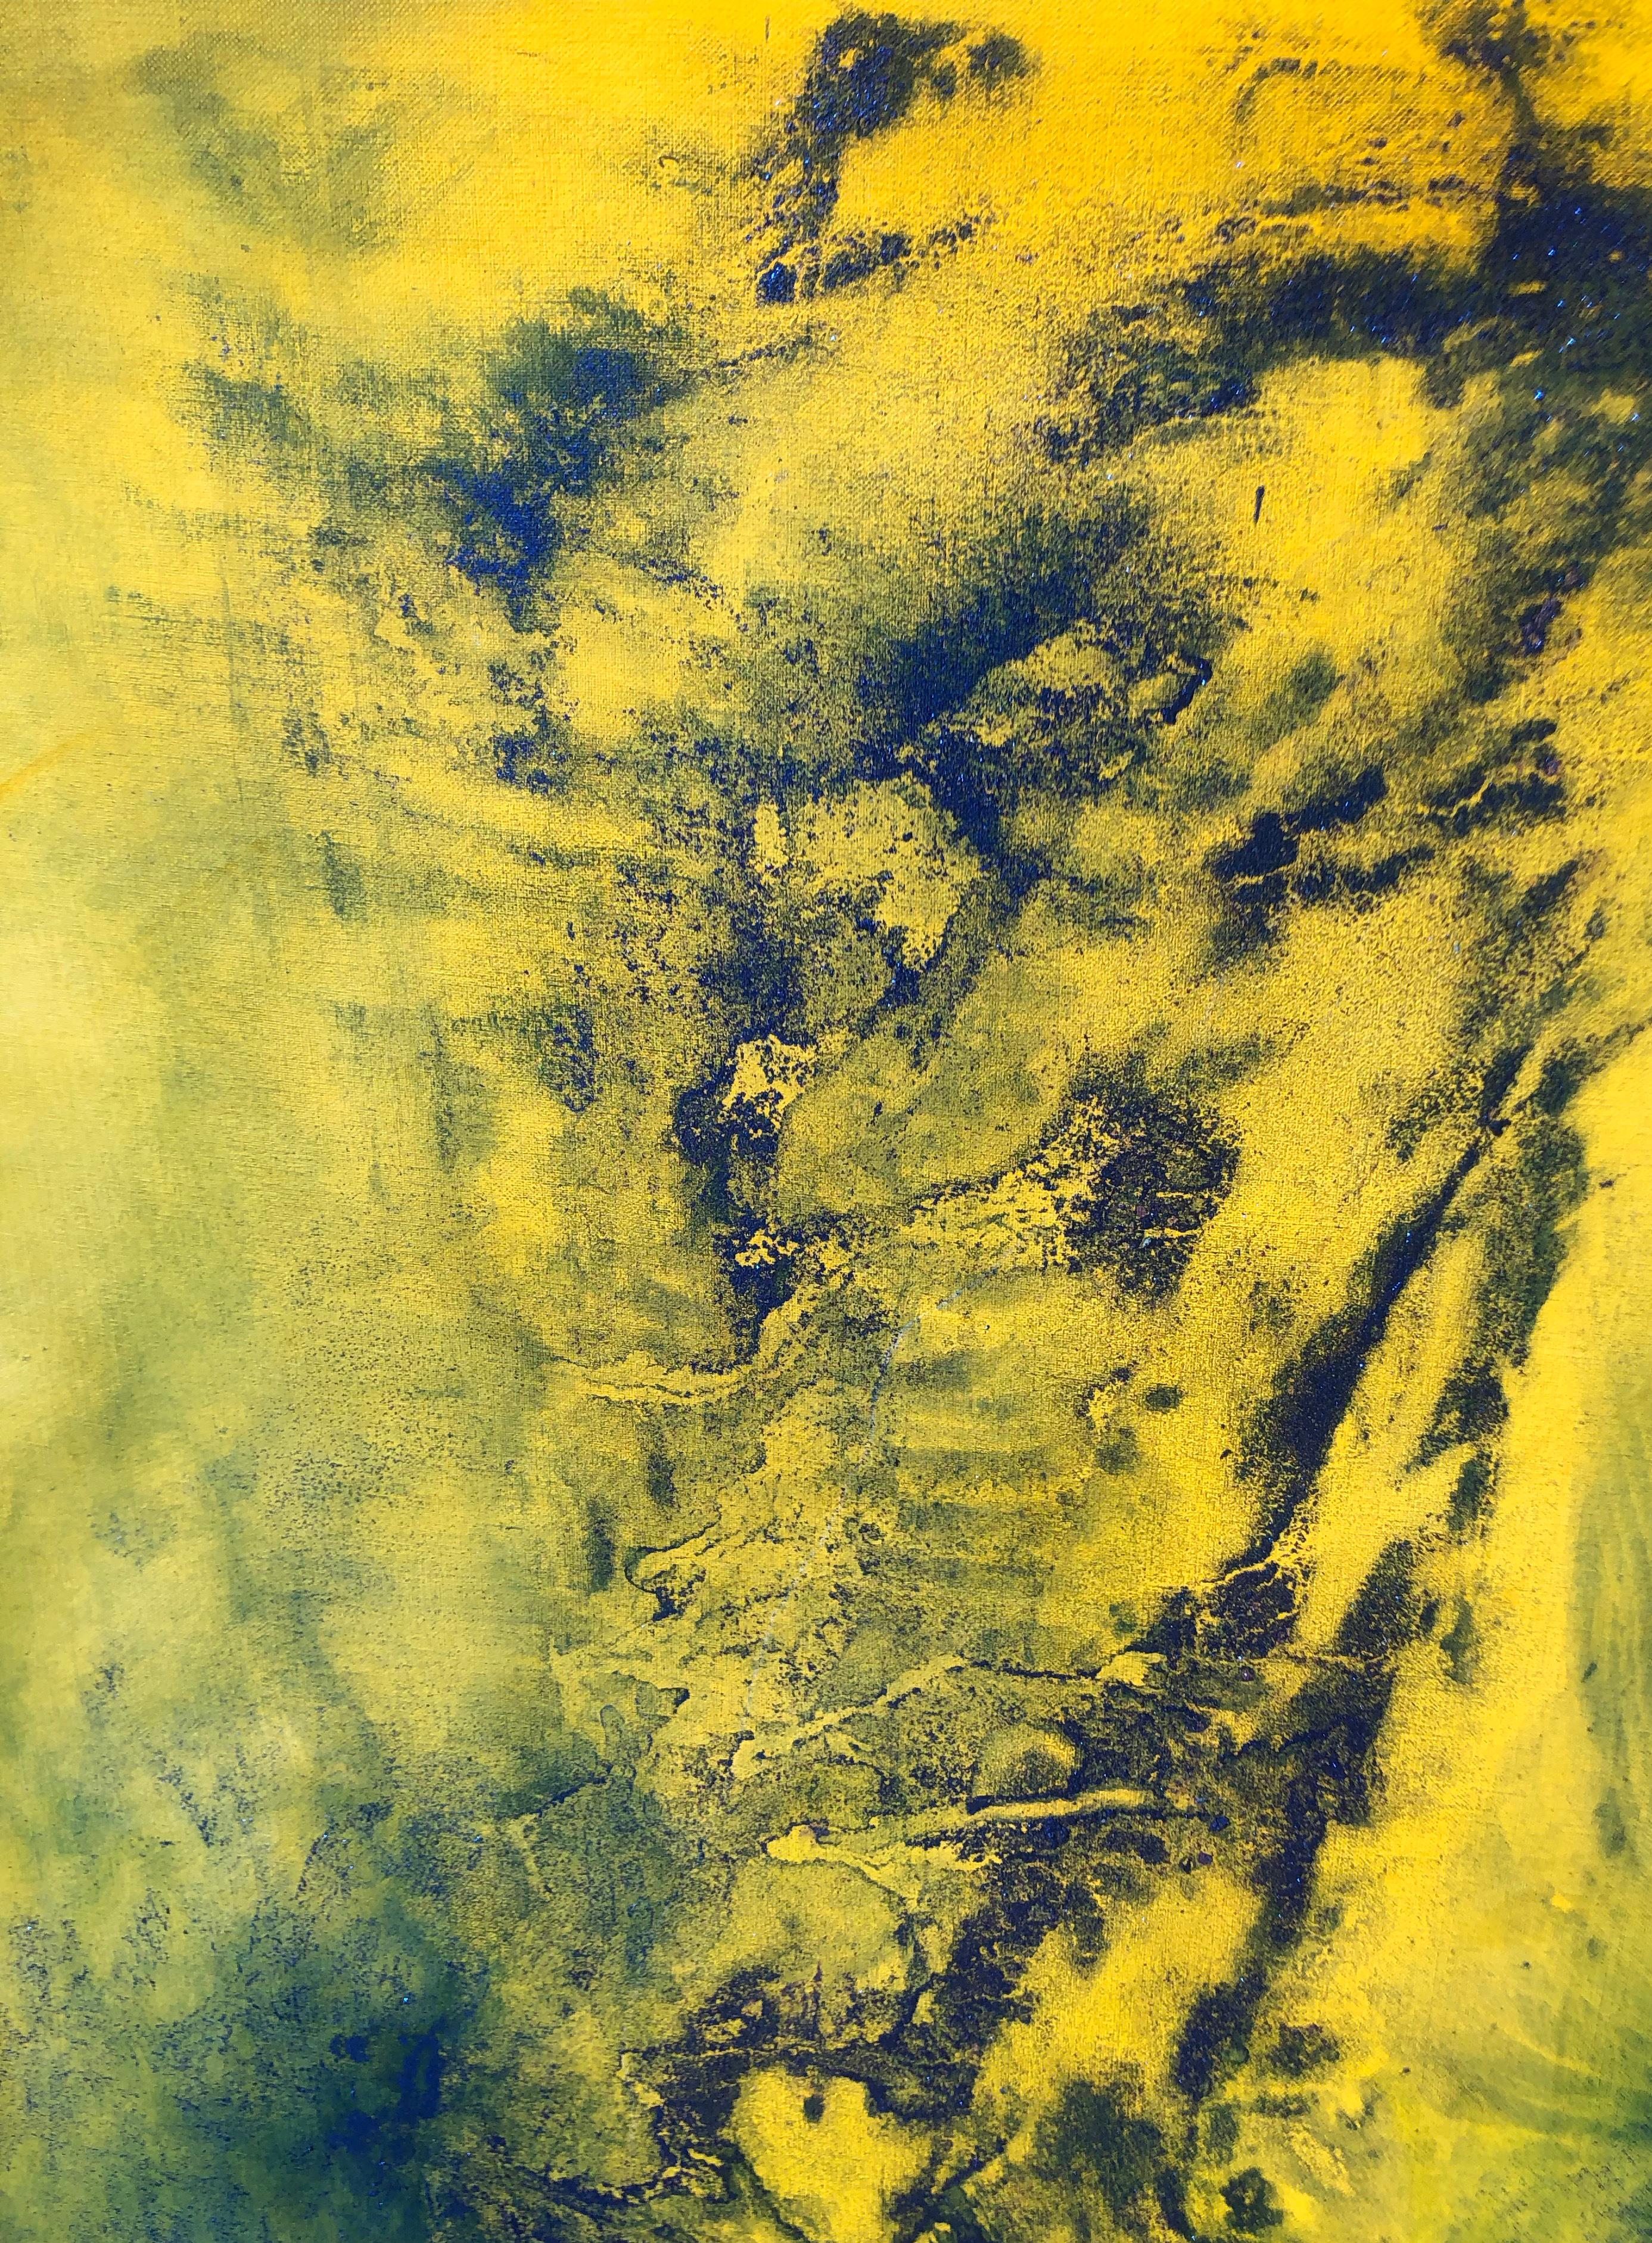 Contemporary art - 21st century painting on linen canvas - Blue, yellow, waves (Abstrakt), Painting, von Volodymyr Zayichenko